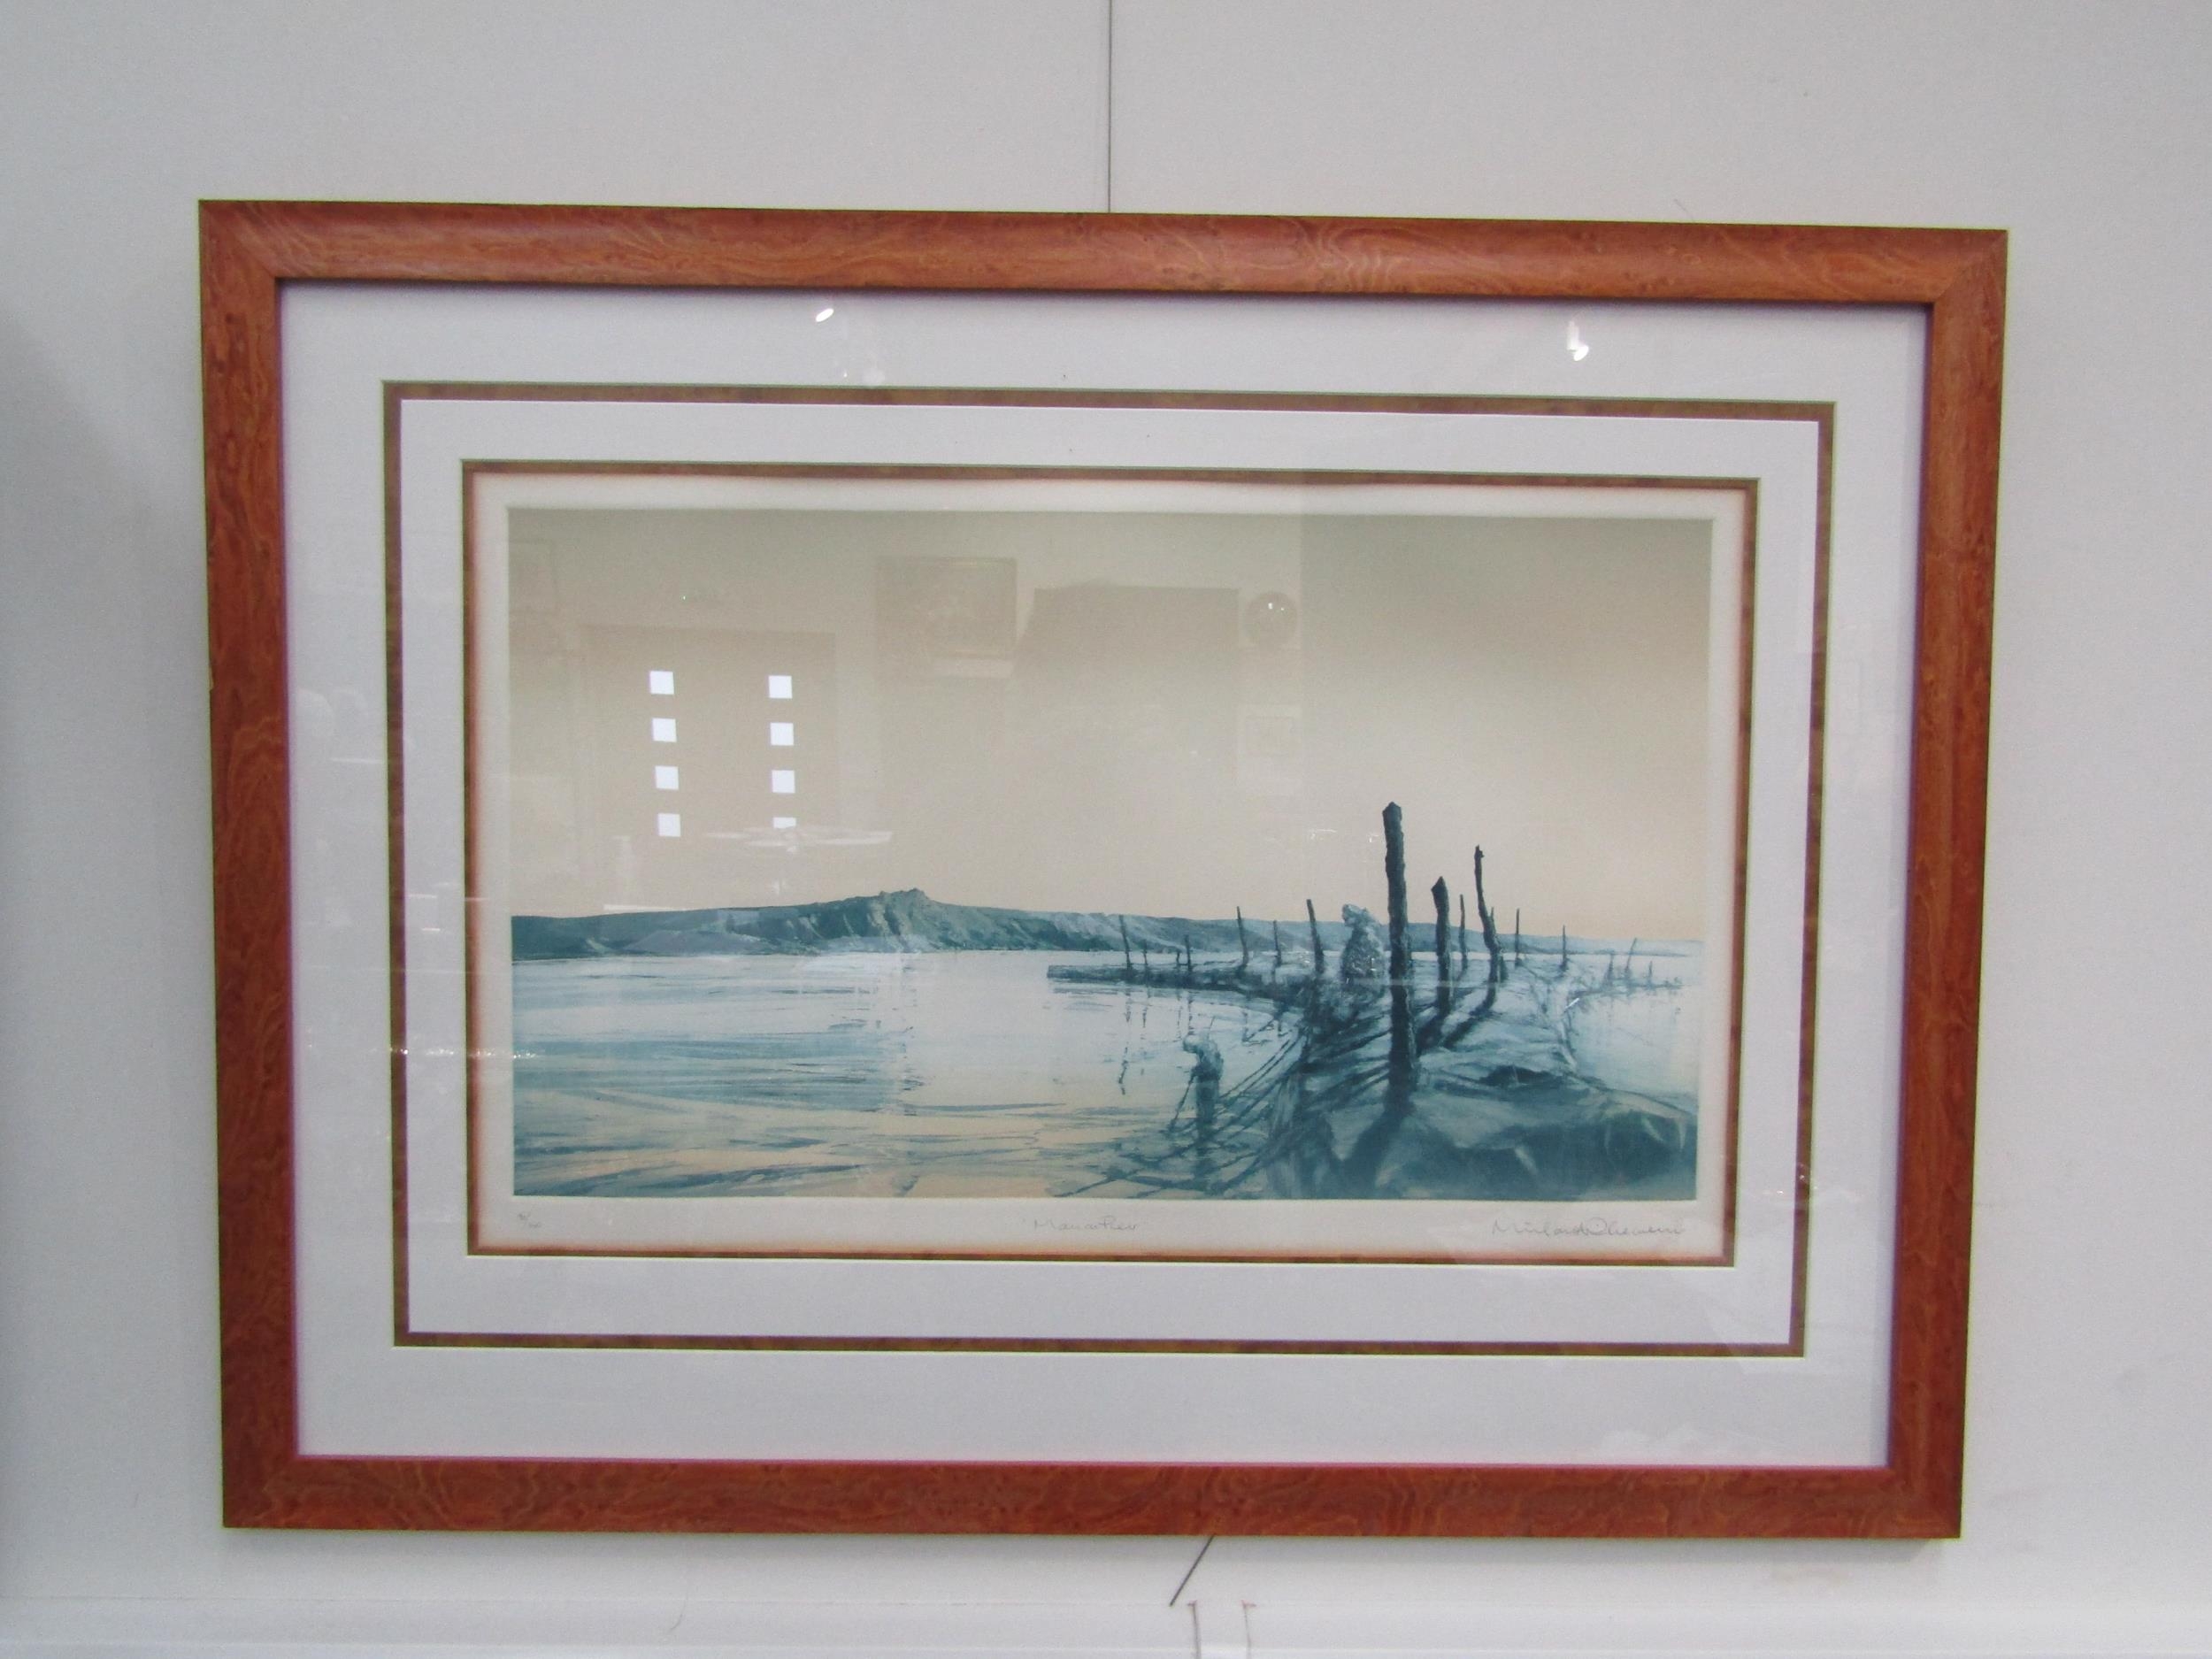 A Michael Richloer limited edition print, ‘Man on Pier’, 90/150, framed and glazed, 38.5cm x 63cm